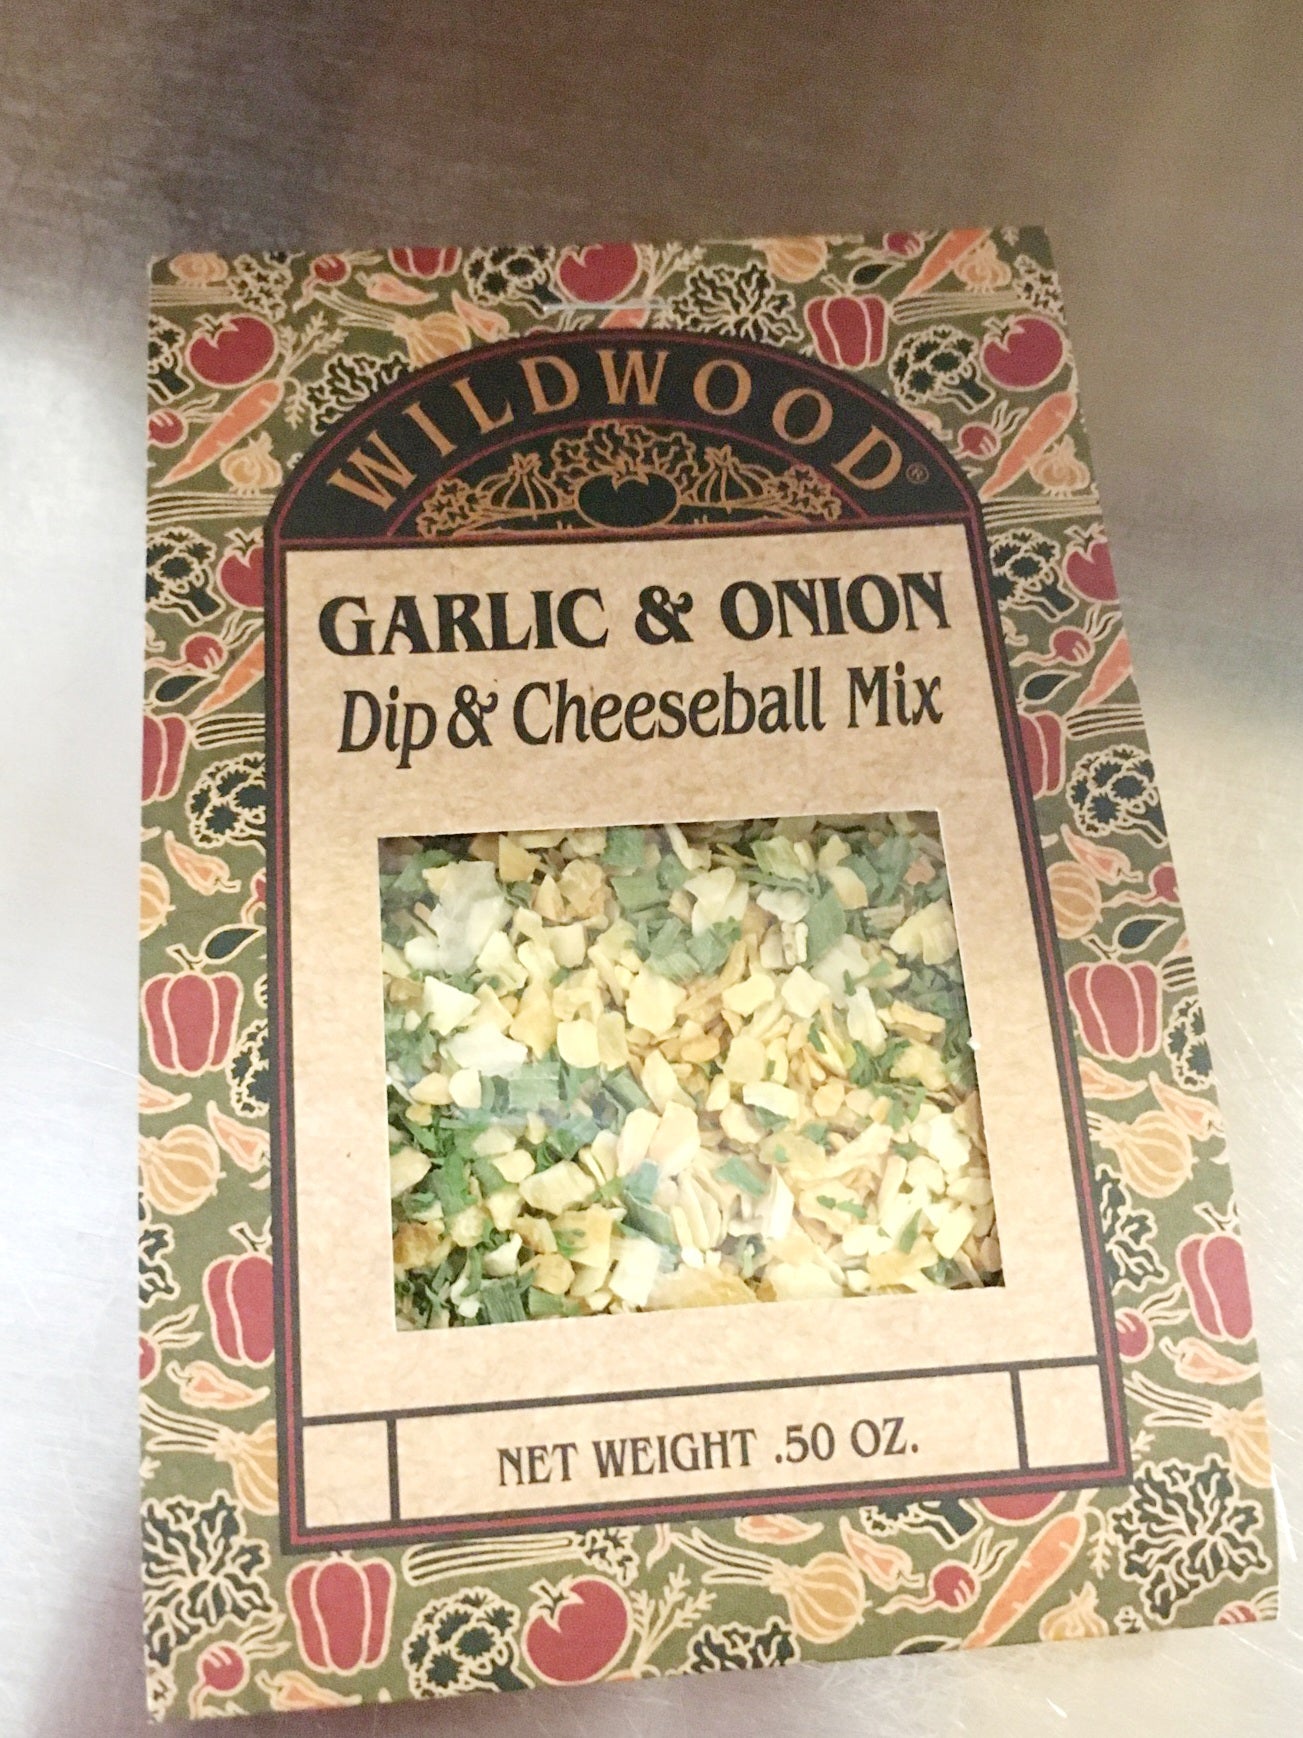 Wildwood Dips Garlic & Onion